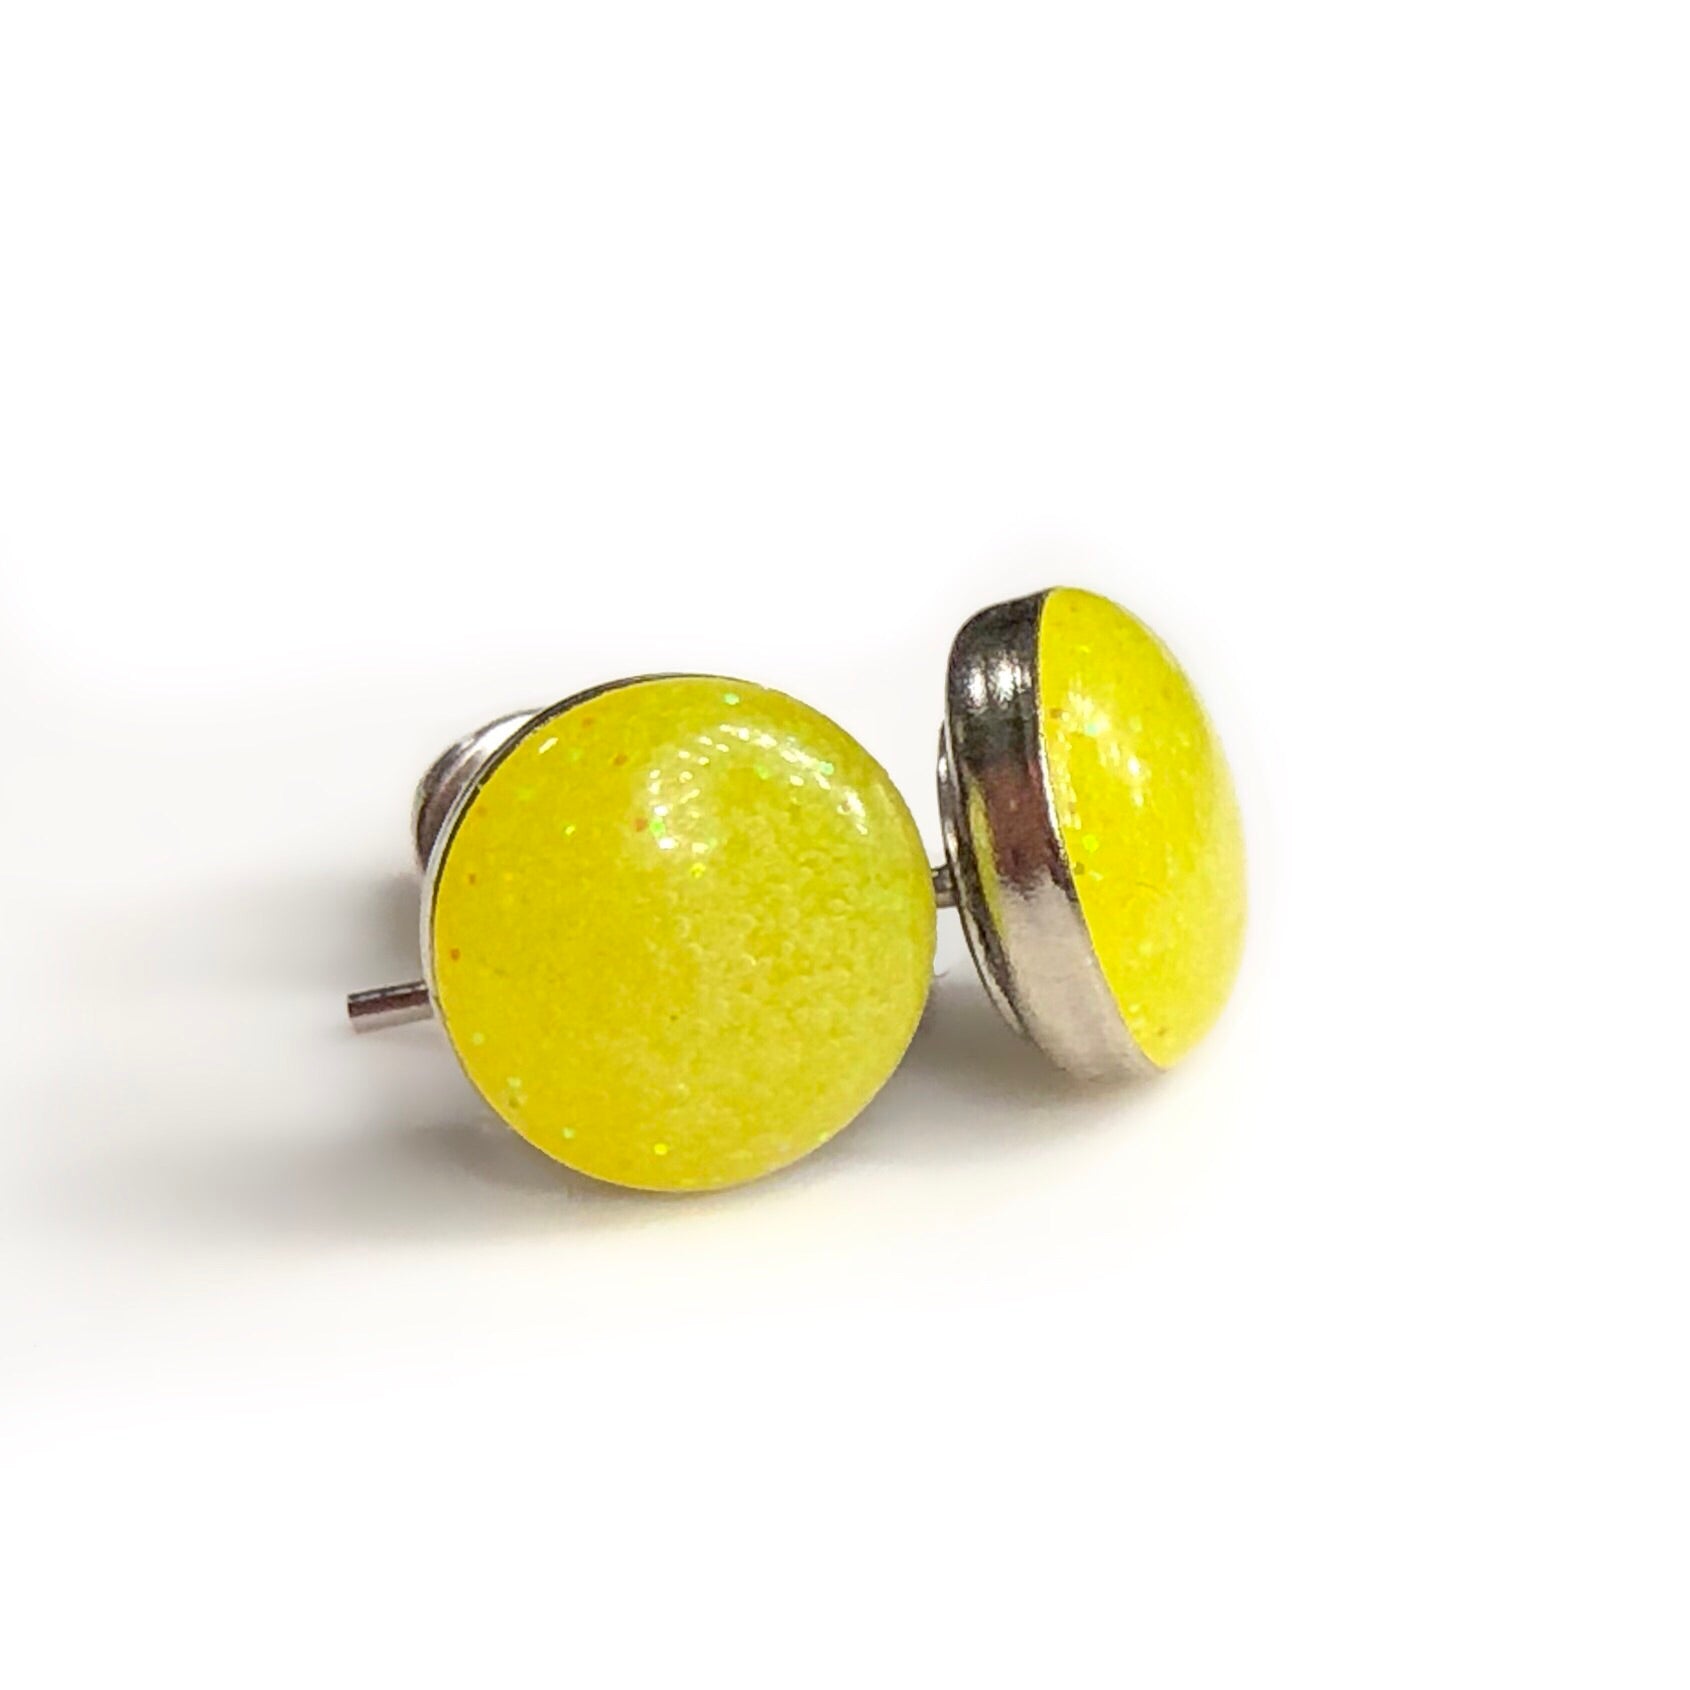 Neon yellow resin cast earrings on a silver stud.